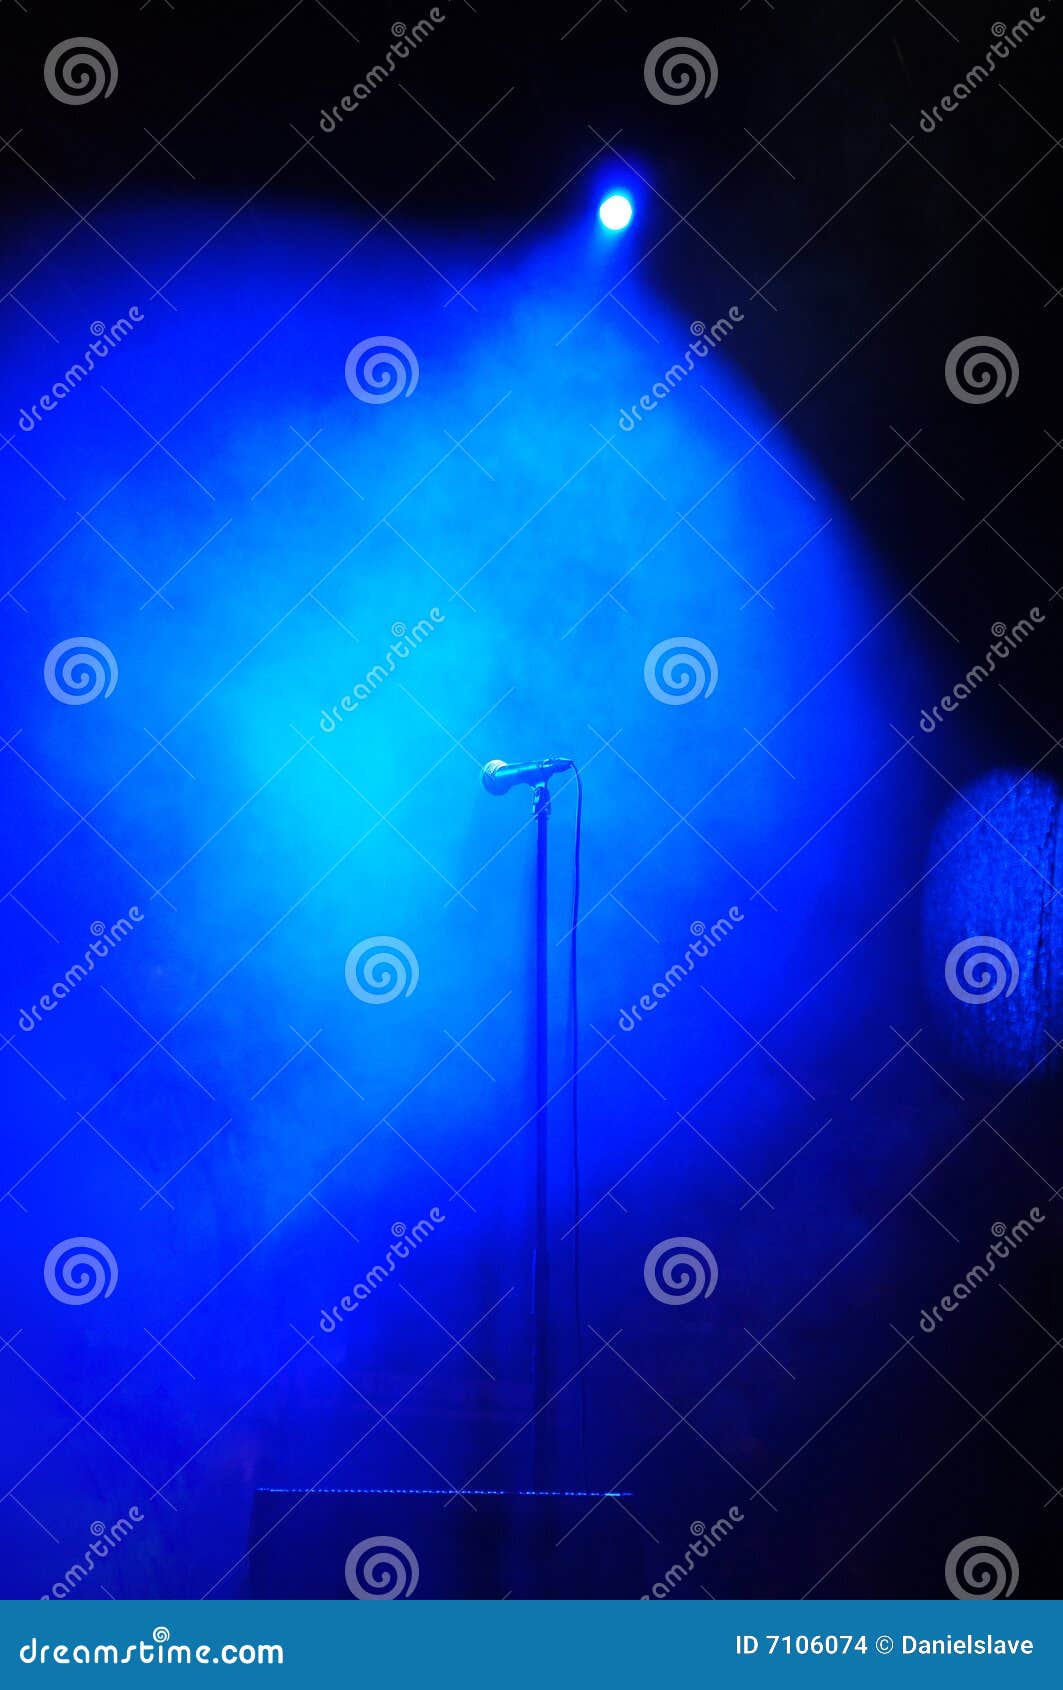 stage smoke microphone